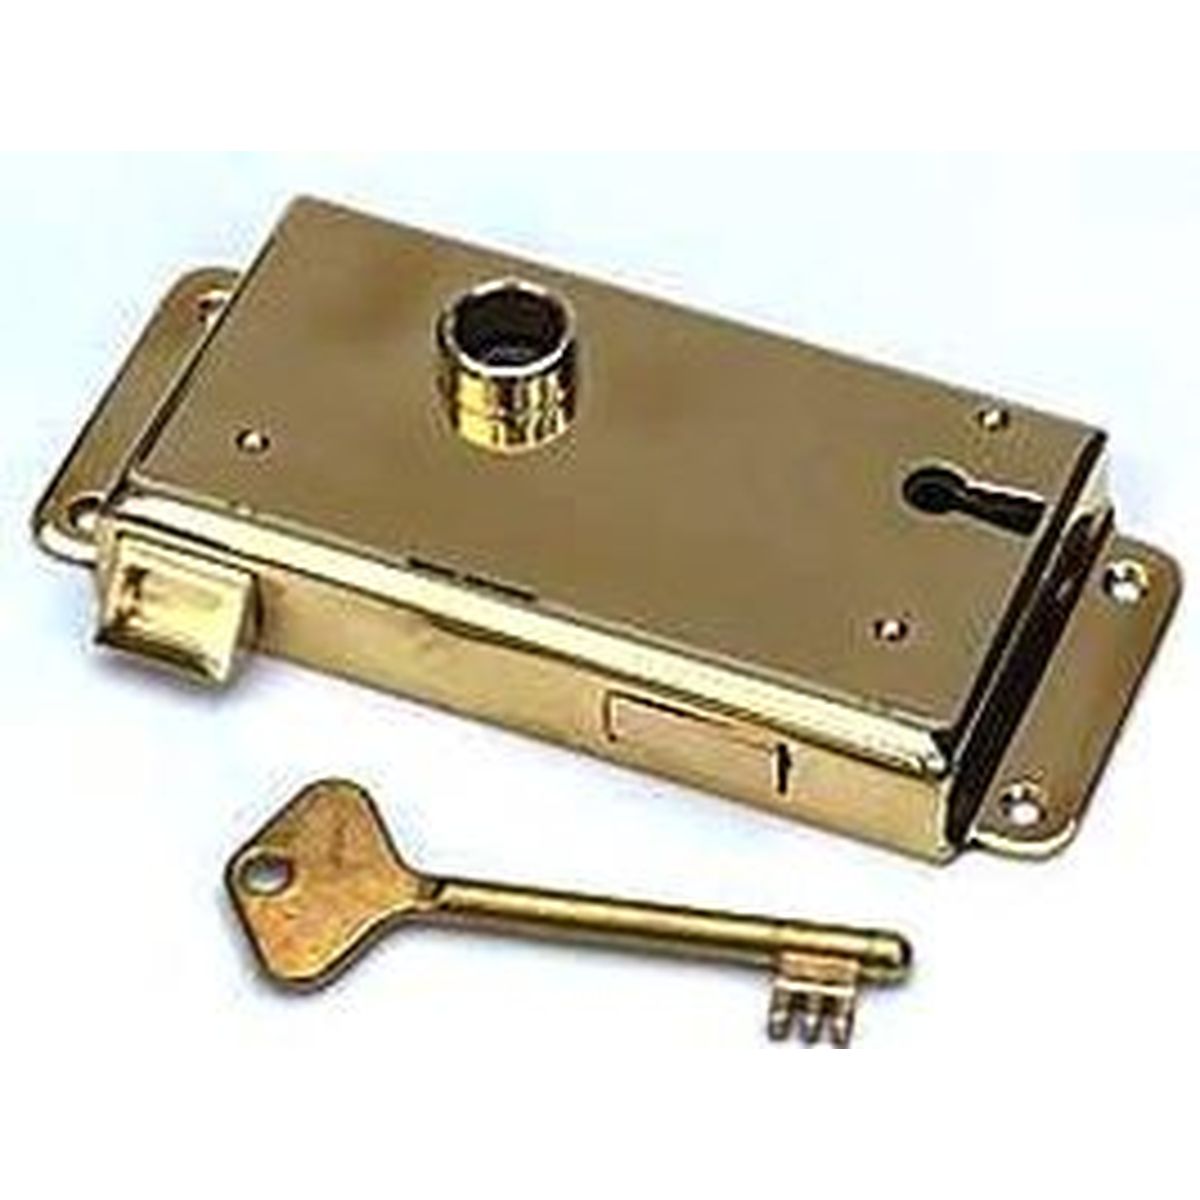 Brass Rim key lock with flange DIN 81307 A, 55/9/75 mm, solid latch